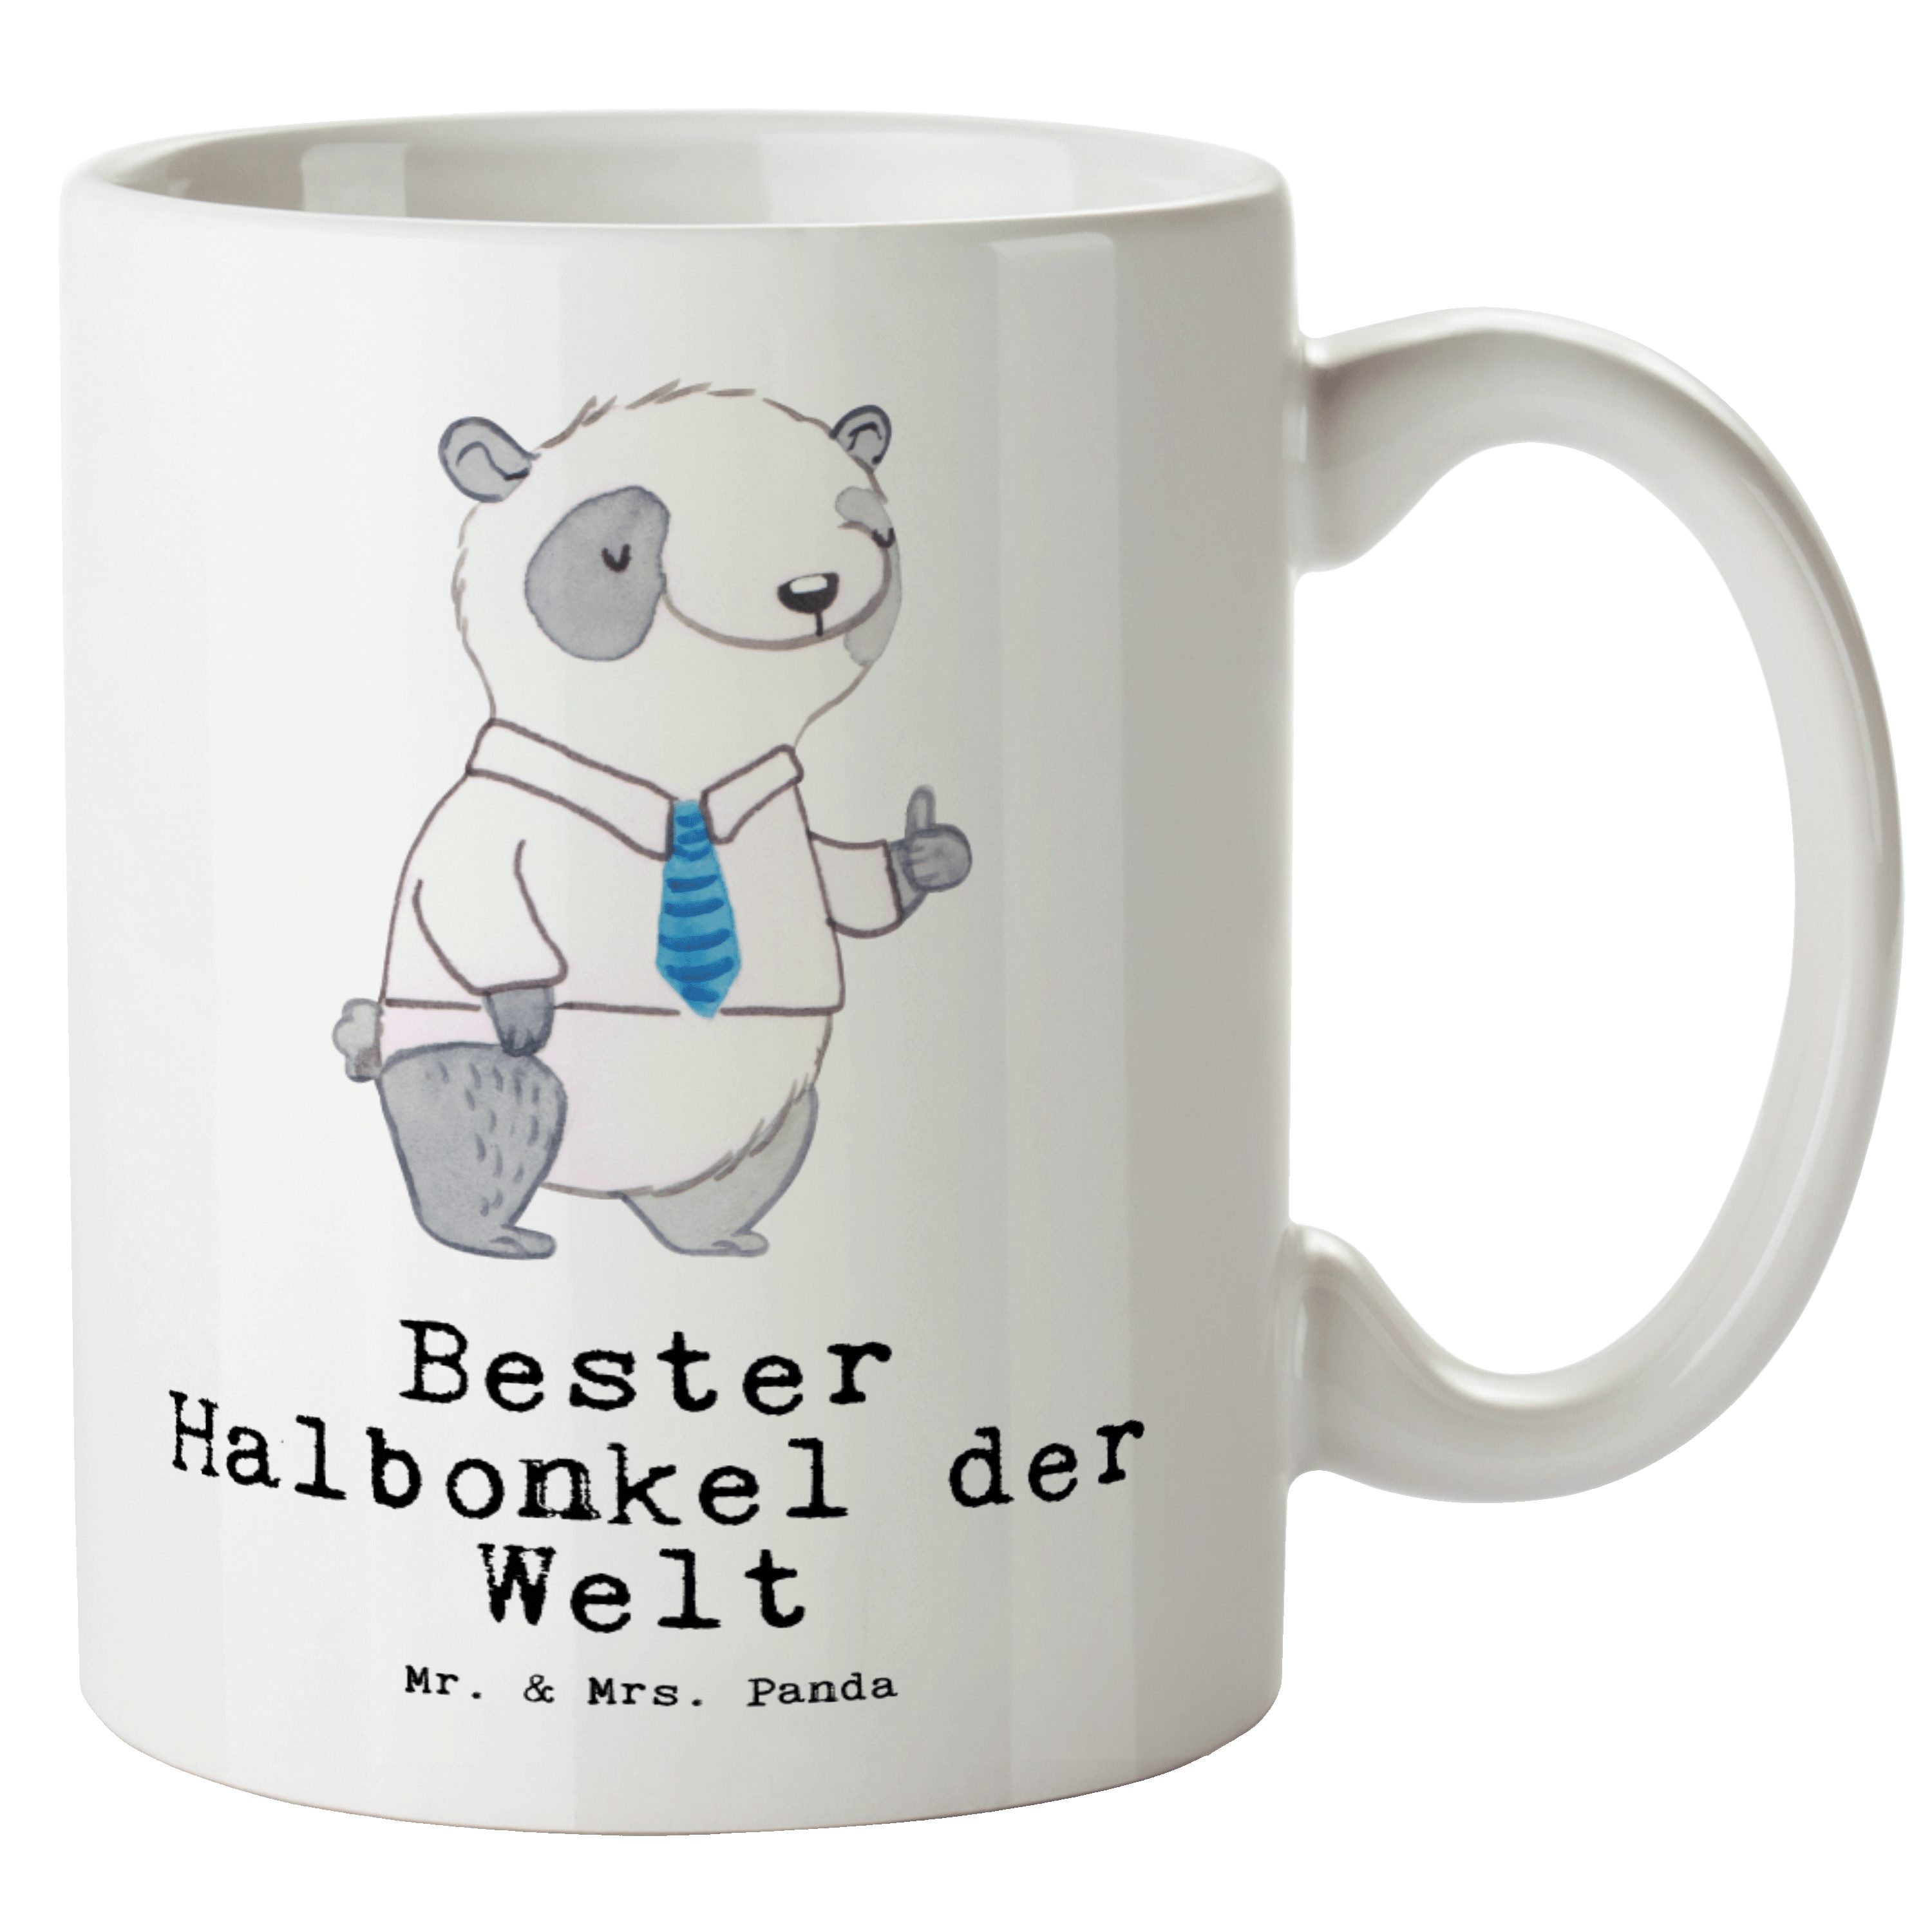 Mr. & Mrs. Panda Weiß Geschenktip, XL Danke, Halbonkel - Welt Keramik - Tasse Bester der Tasse Geschenk, Panda